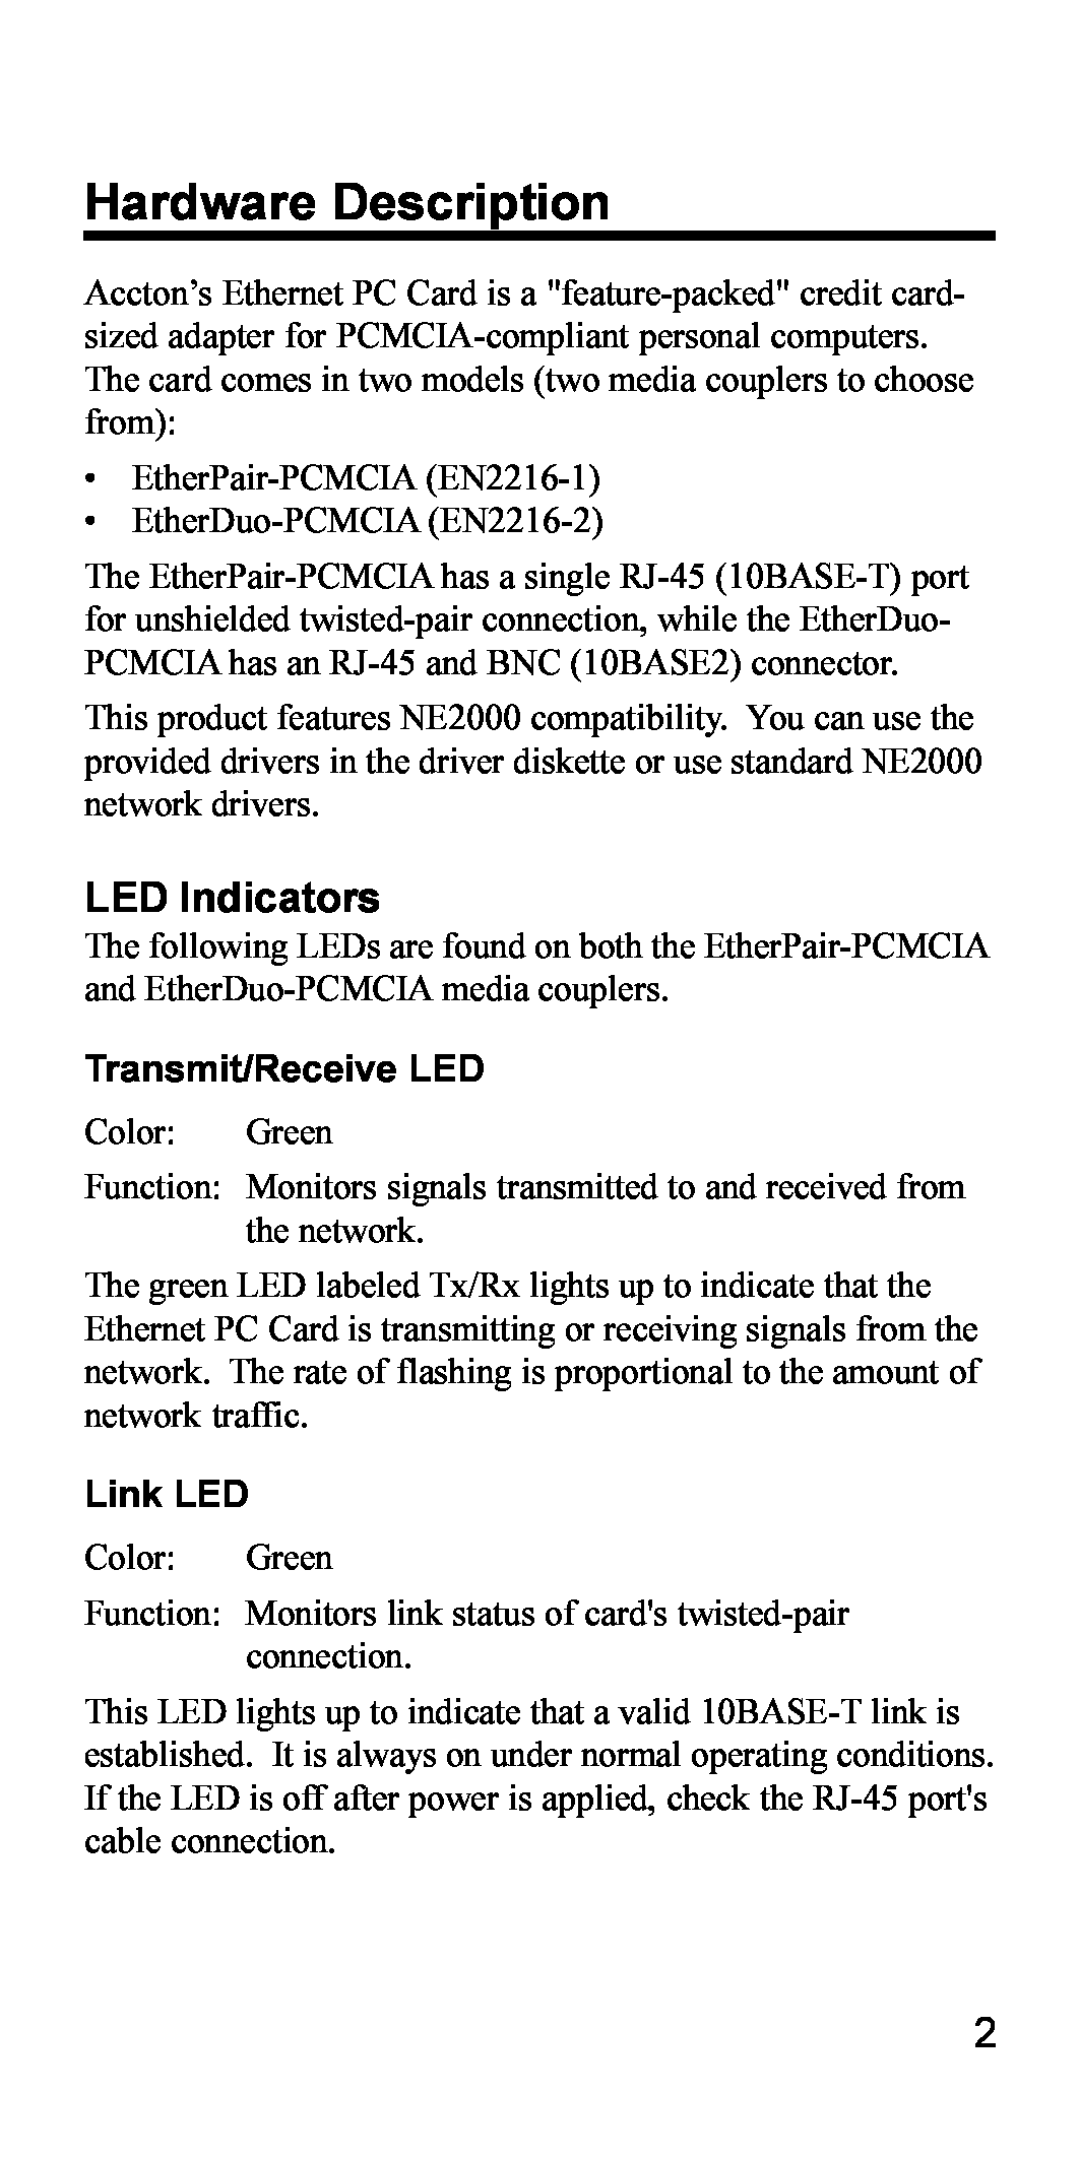 Accton Technology EN2216-2, EN2216-1 specifications Hardware Description, LED Indicators, Transmit/Receive LED, Link LED 